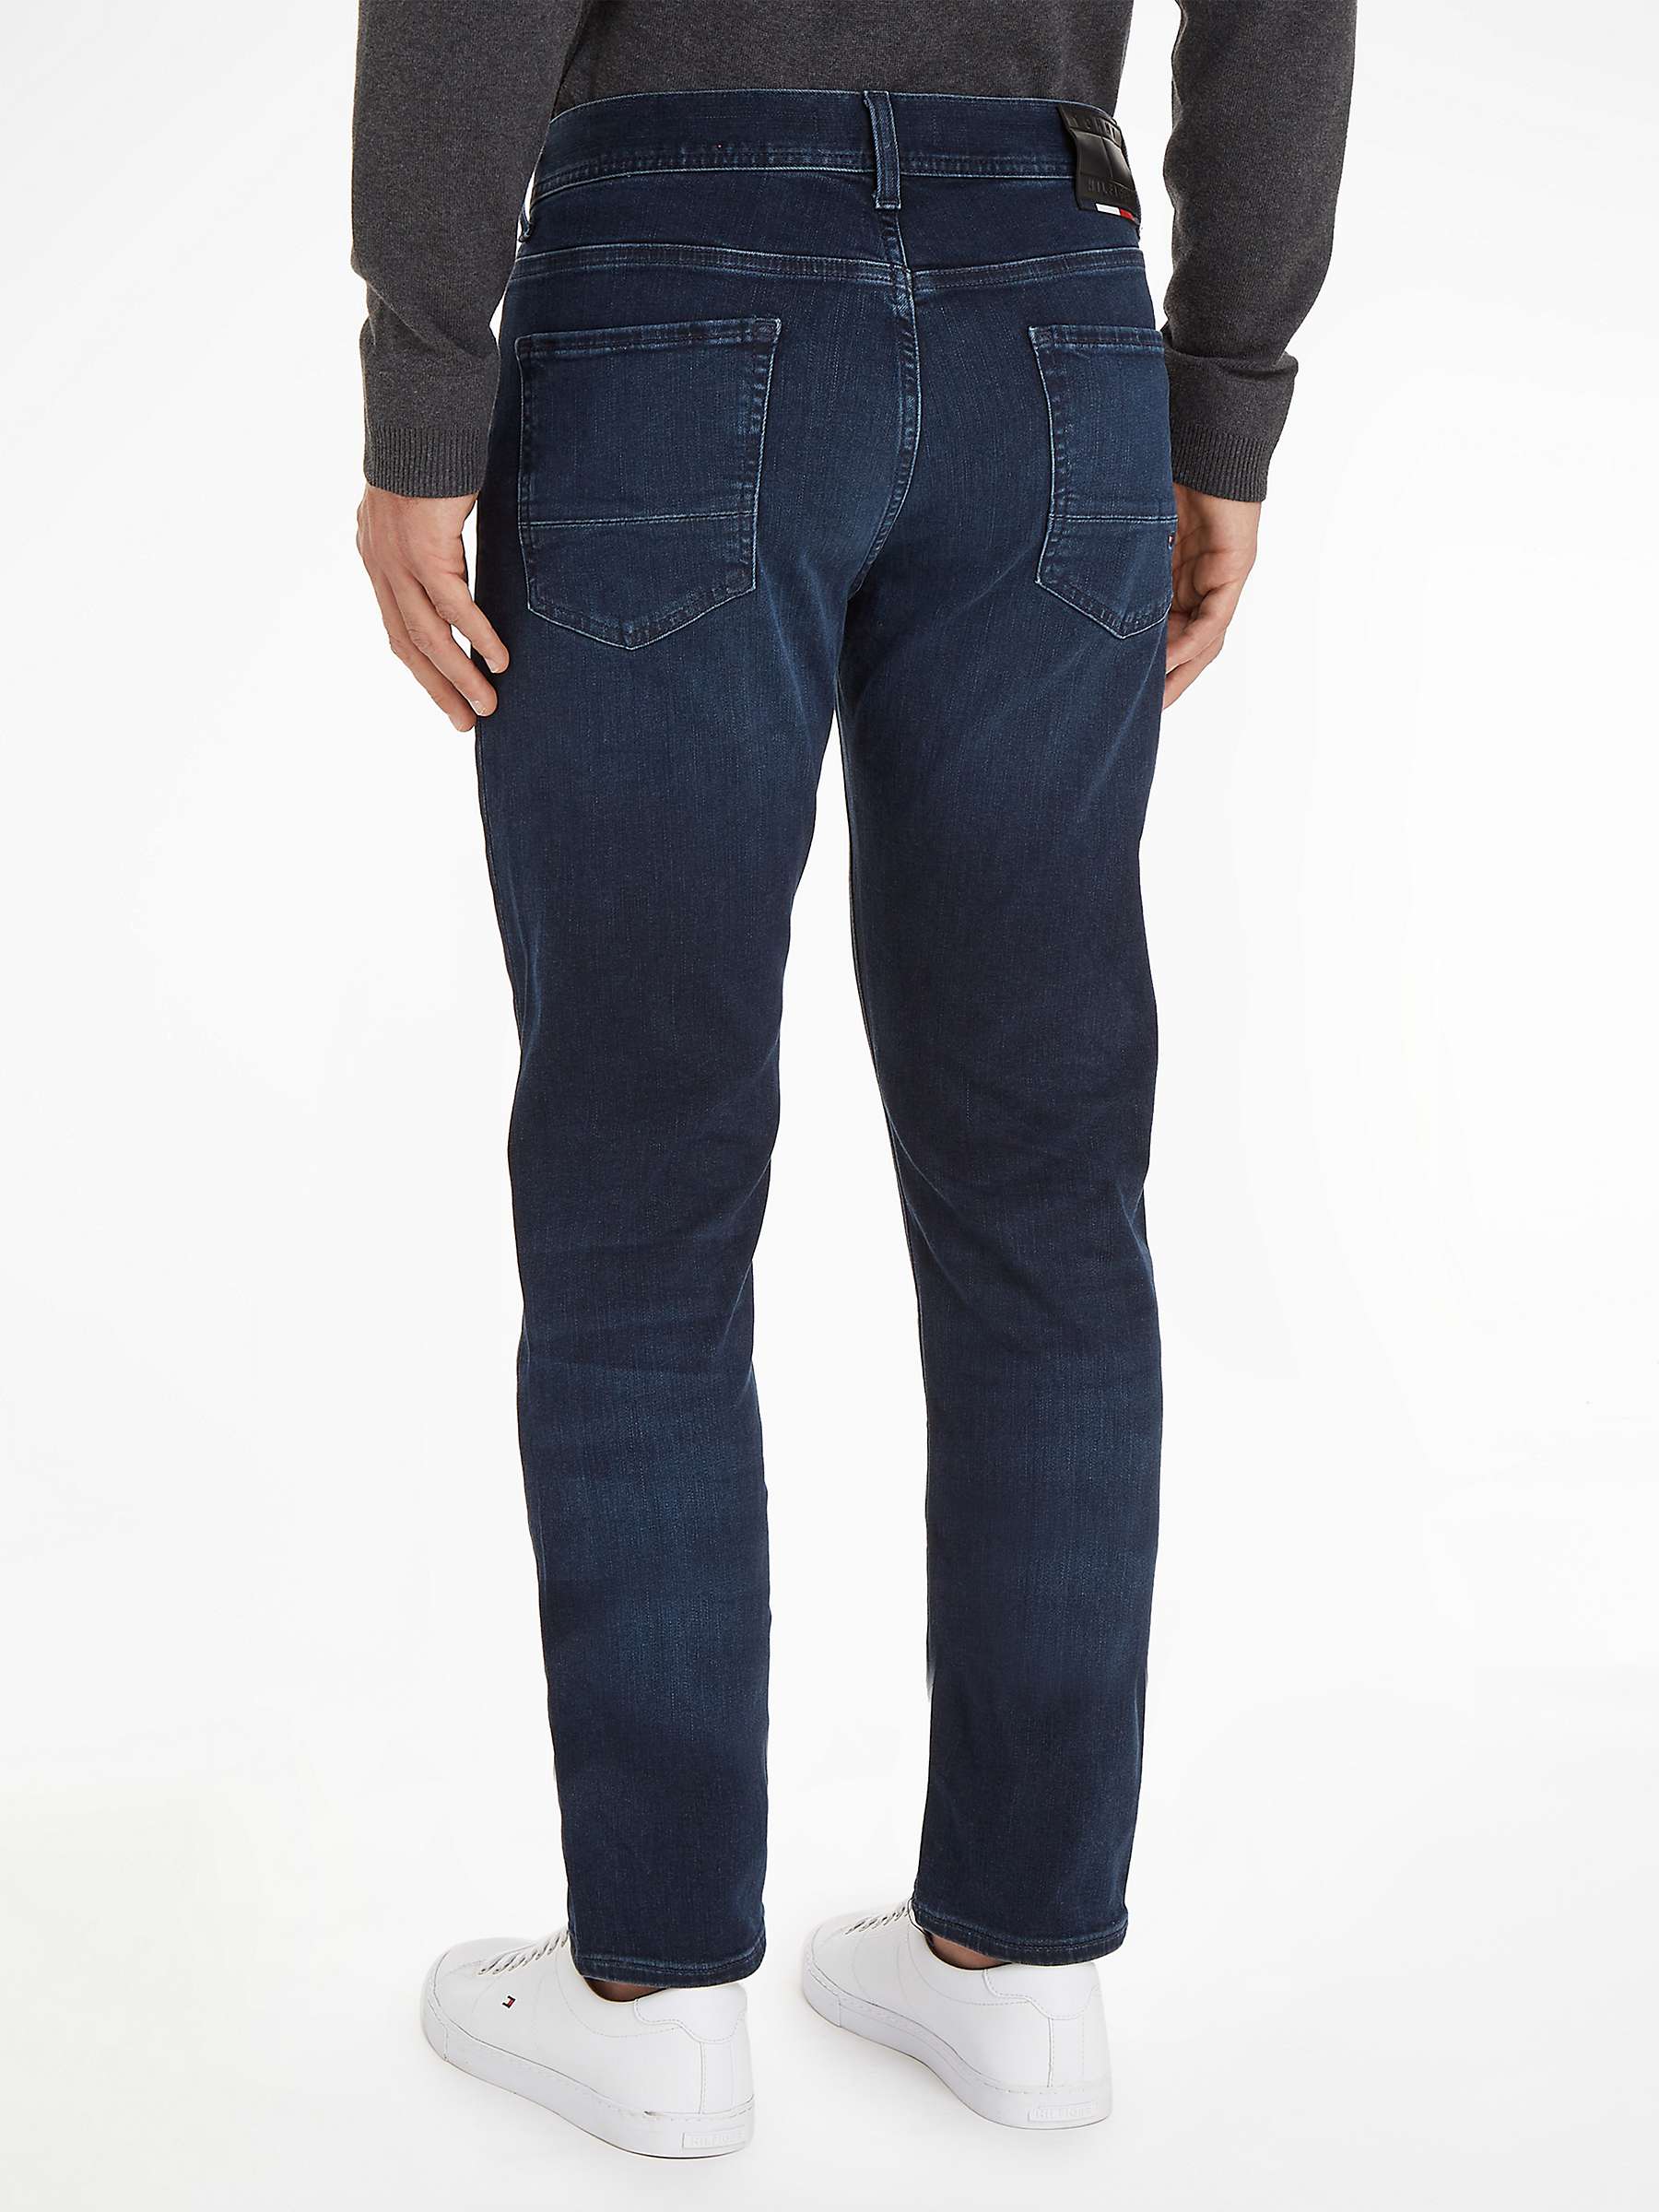 Buy Tommy Hilfiger Bleecker Slim Faded Jeans, Iowa Blue/Black Online at johnlewis.com